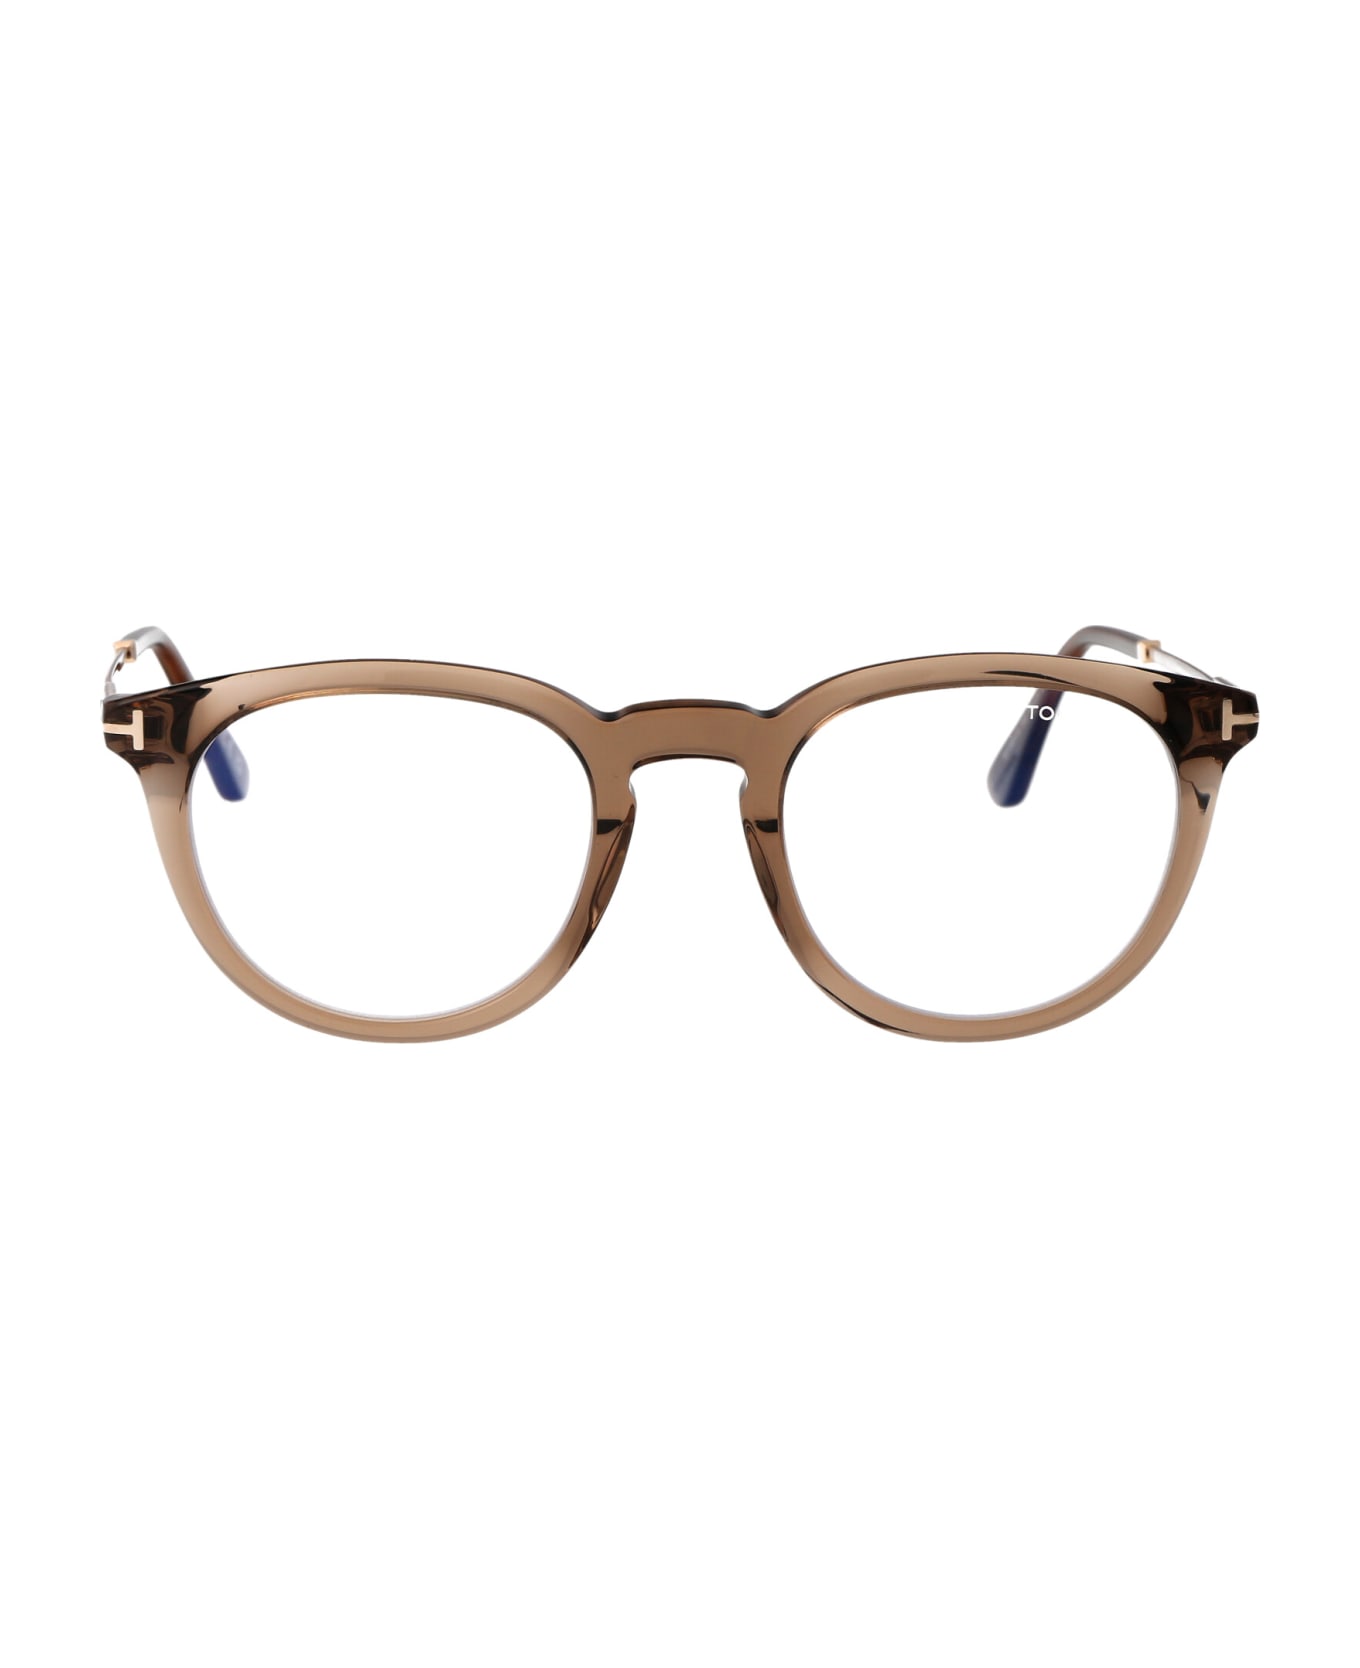 Tom Ford Eyewear Ft5905-b Glasses - 045 Marrone Chiaro Luc アイウェア